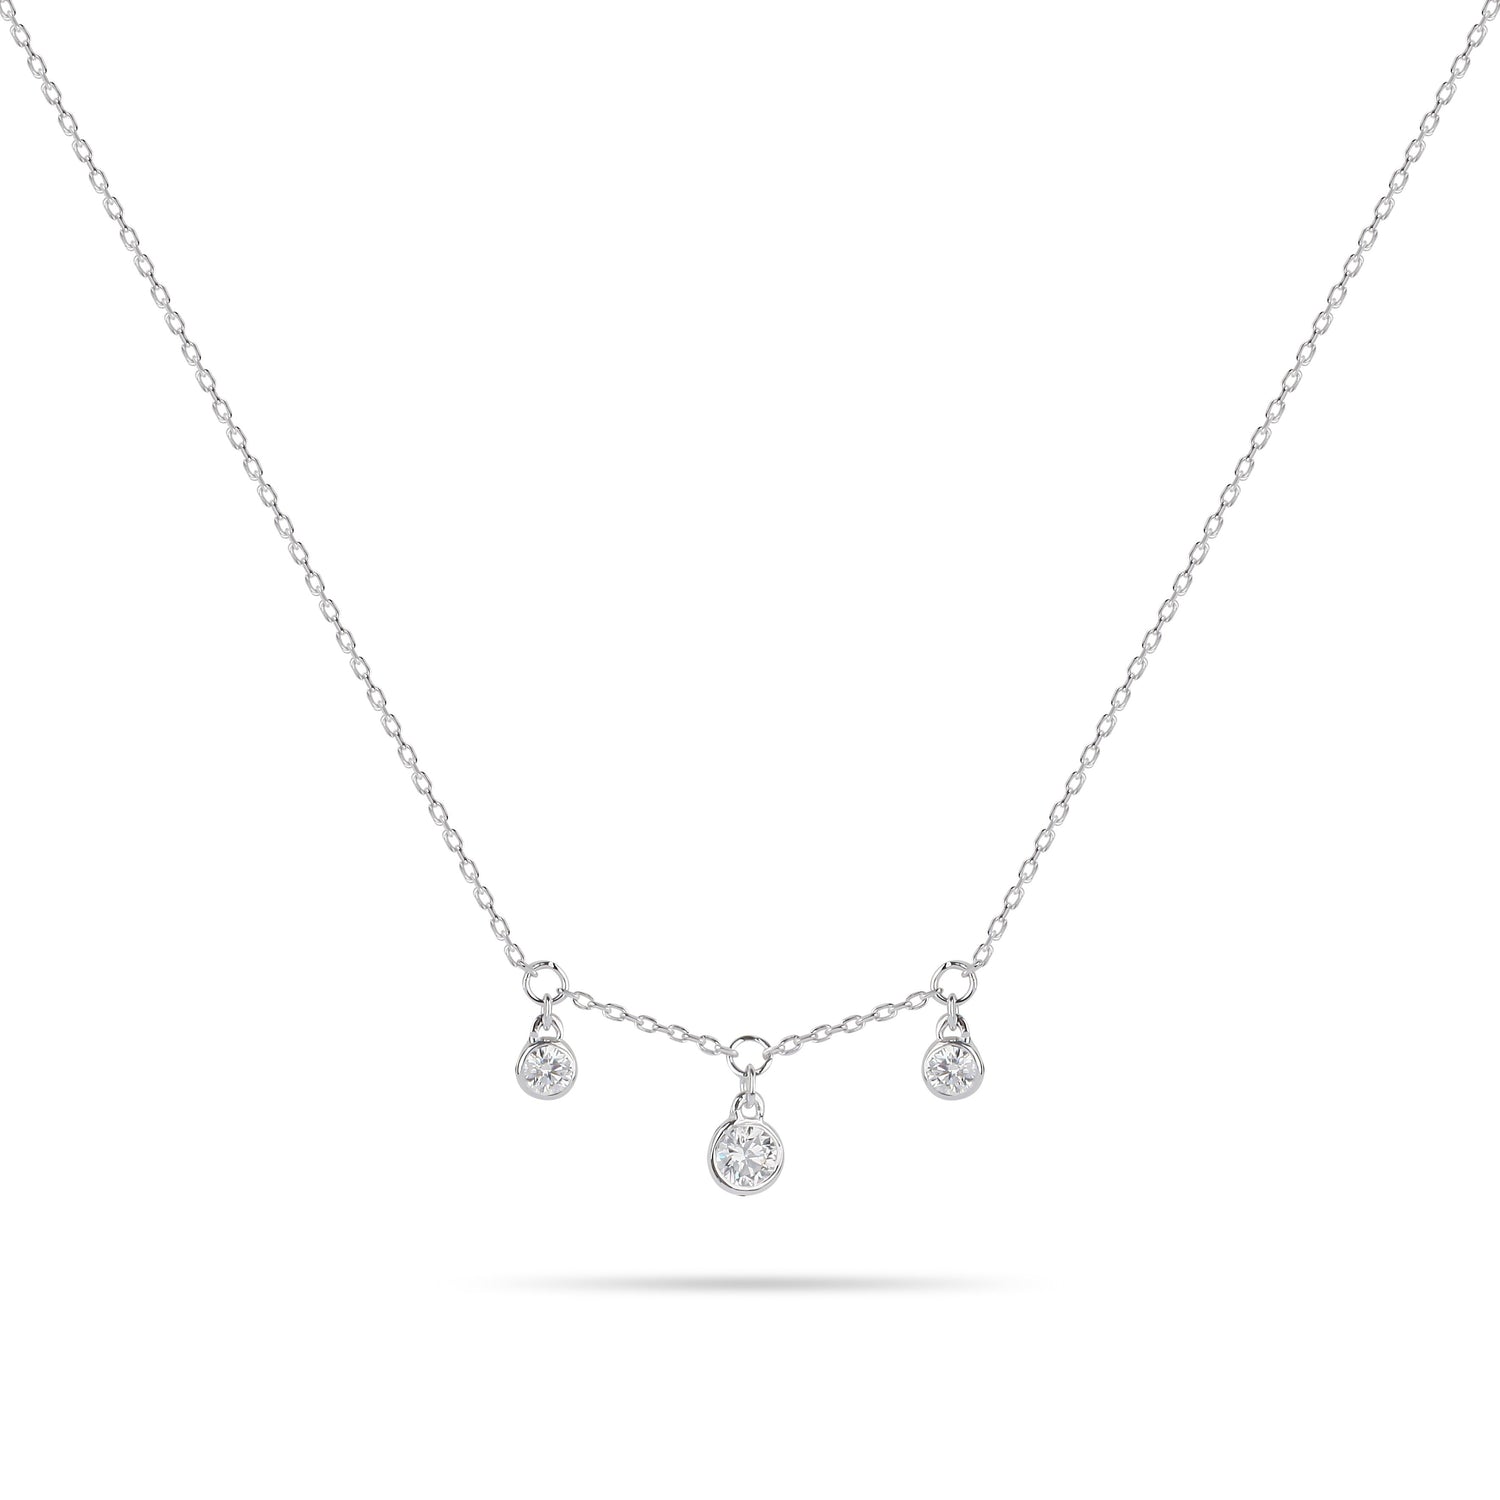 Triple Diamond Chain Necklace | Chain Necklace Women